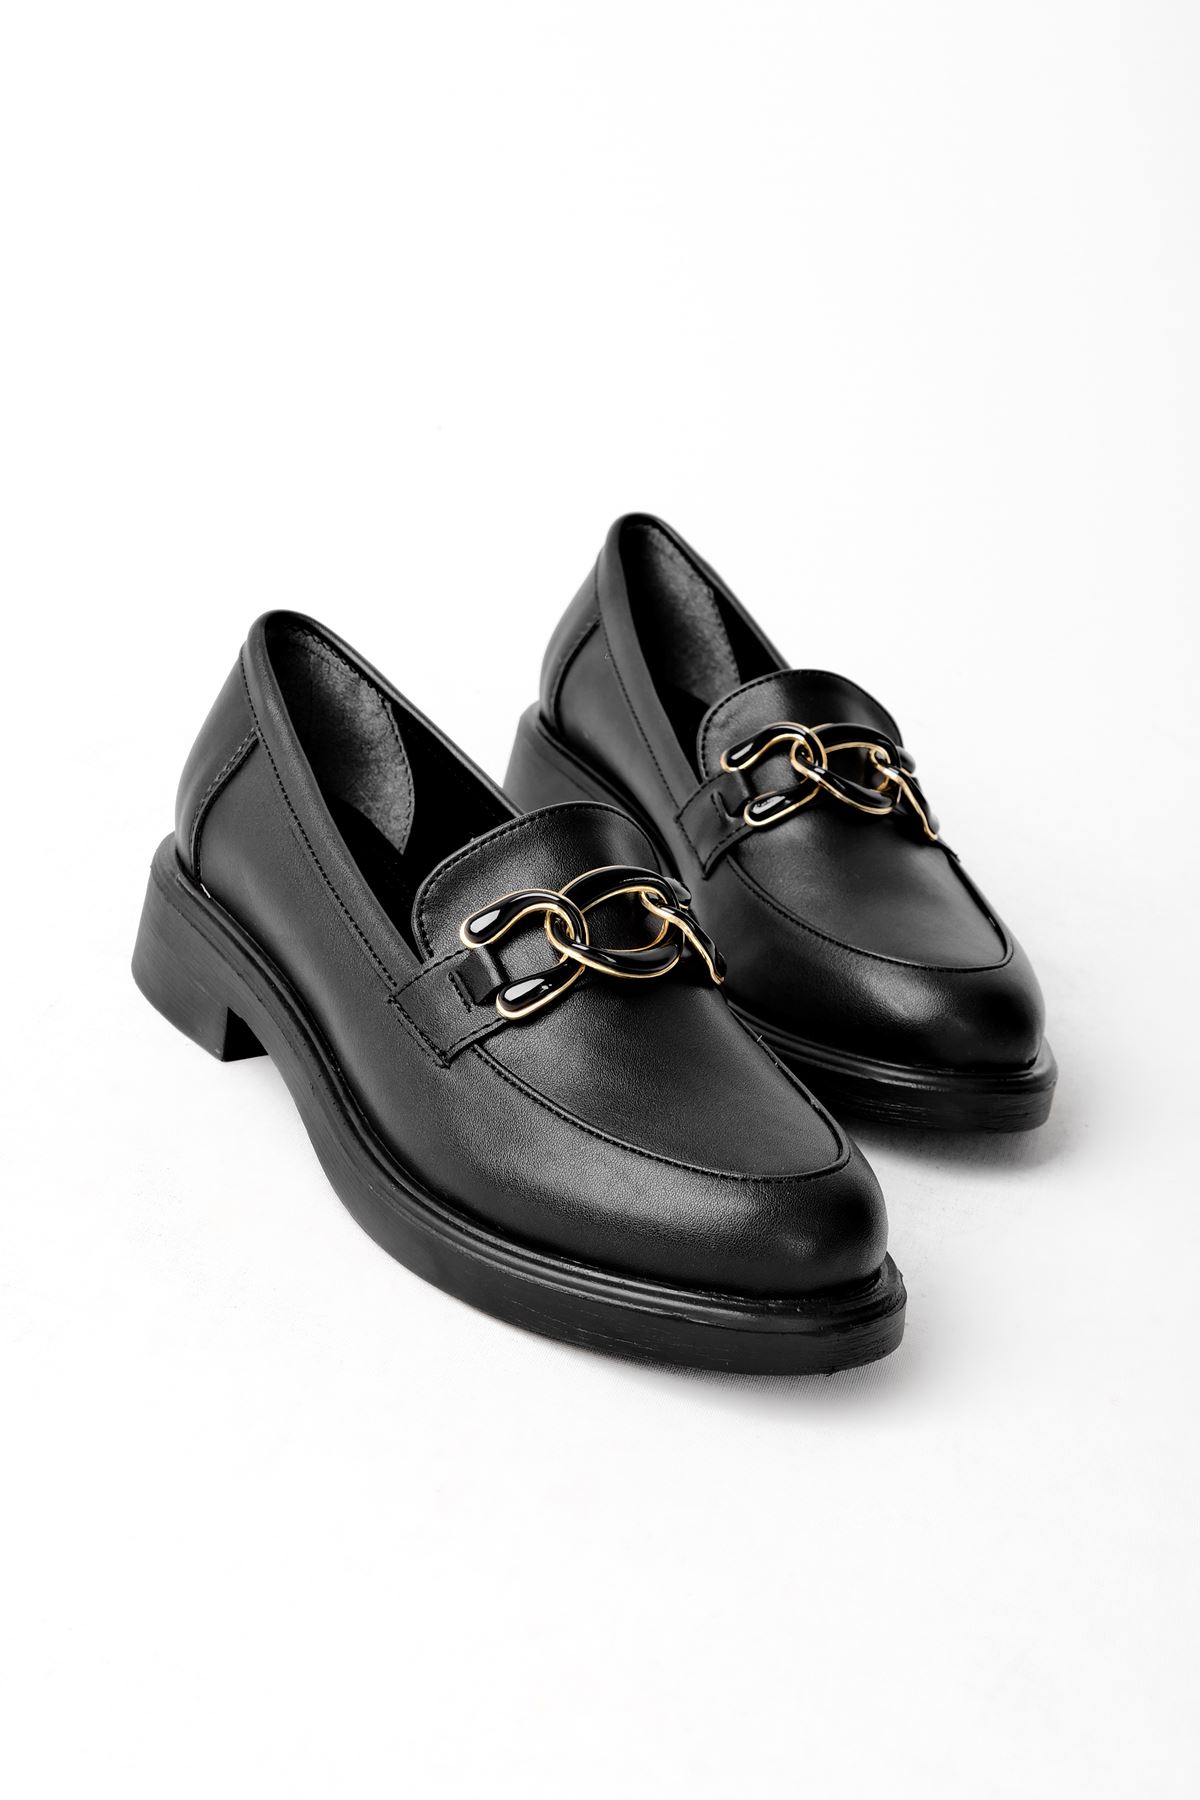 Ponte Yuvarlak Metal Oxford Kadın Ayakkabı-siyah